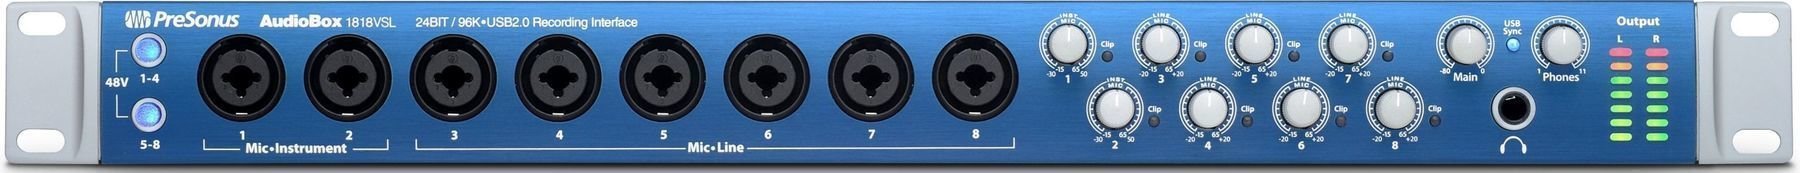 USB аудио интерфейс Presonus AudioBox 1818 VSL